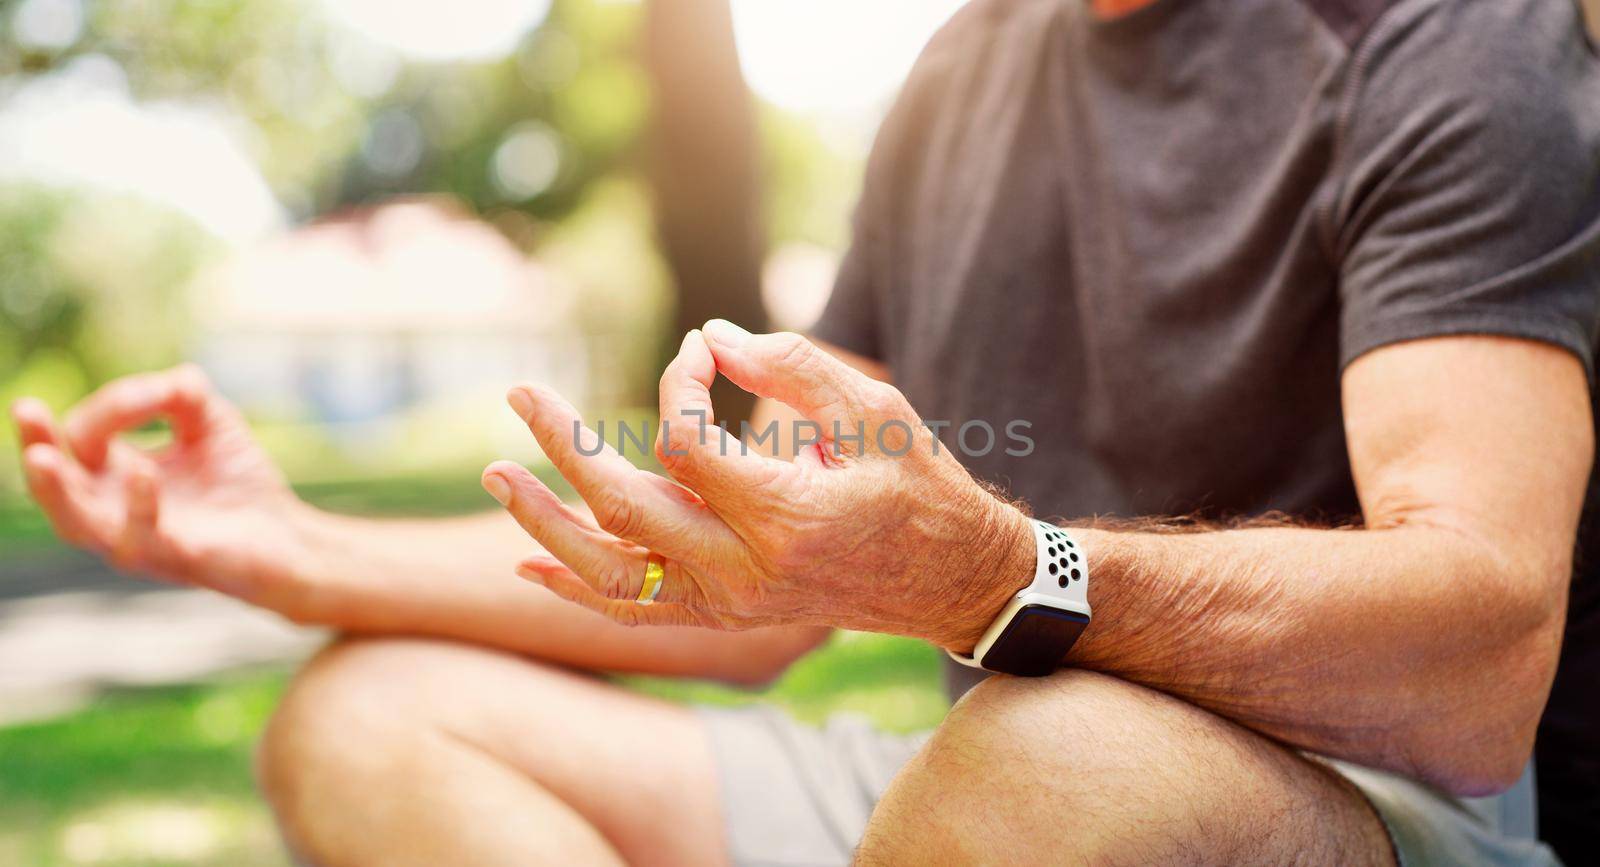 Meditation is the secret behind his excellent health. an unreccognizable senior man meditating at the park